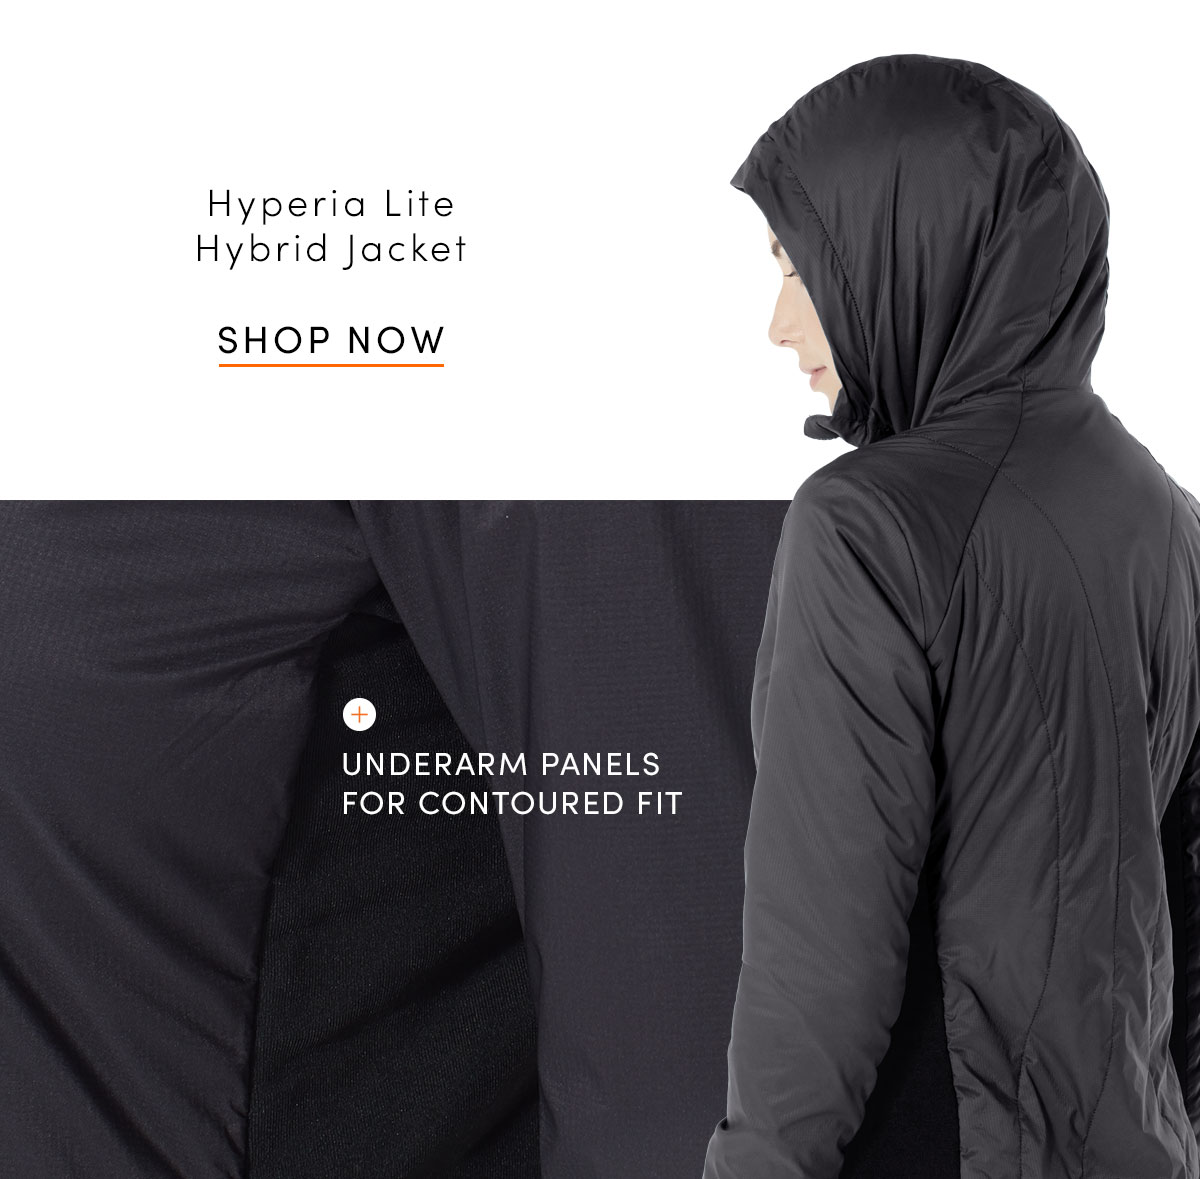 Hyperia Lite Hybrid Jacket